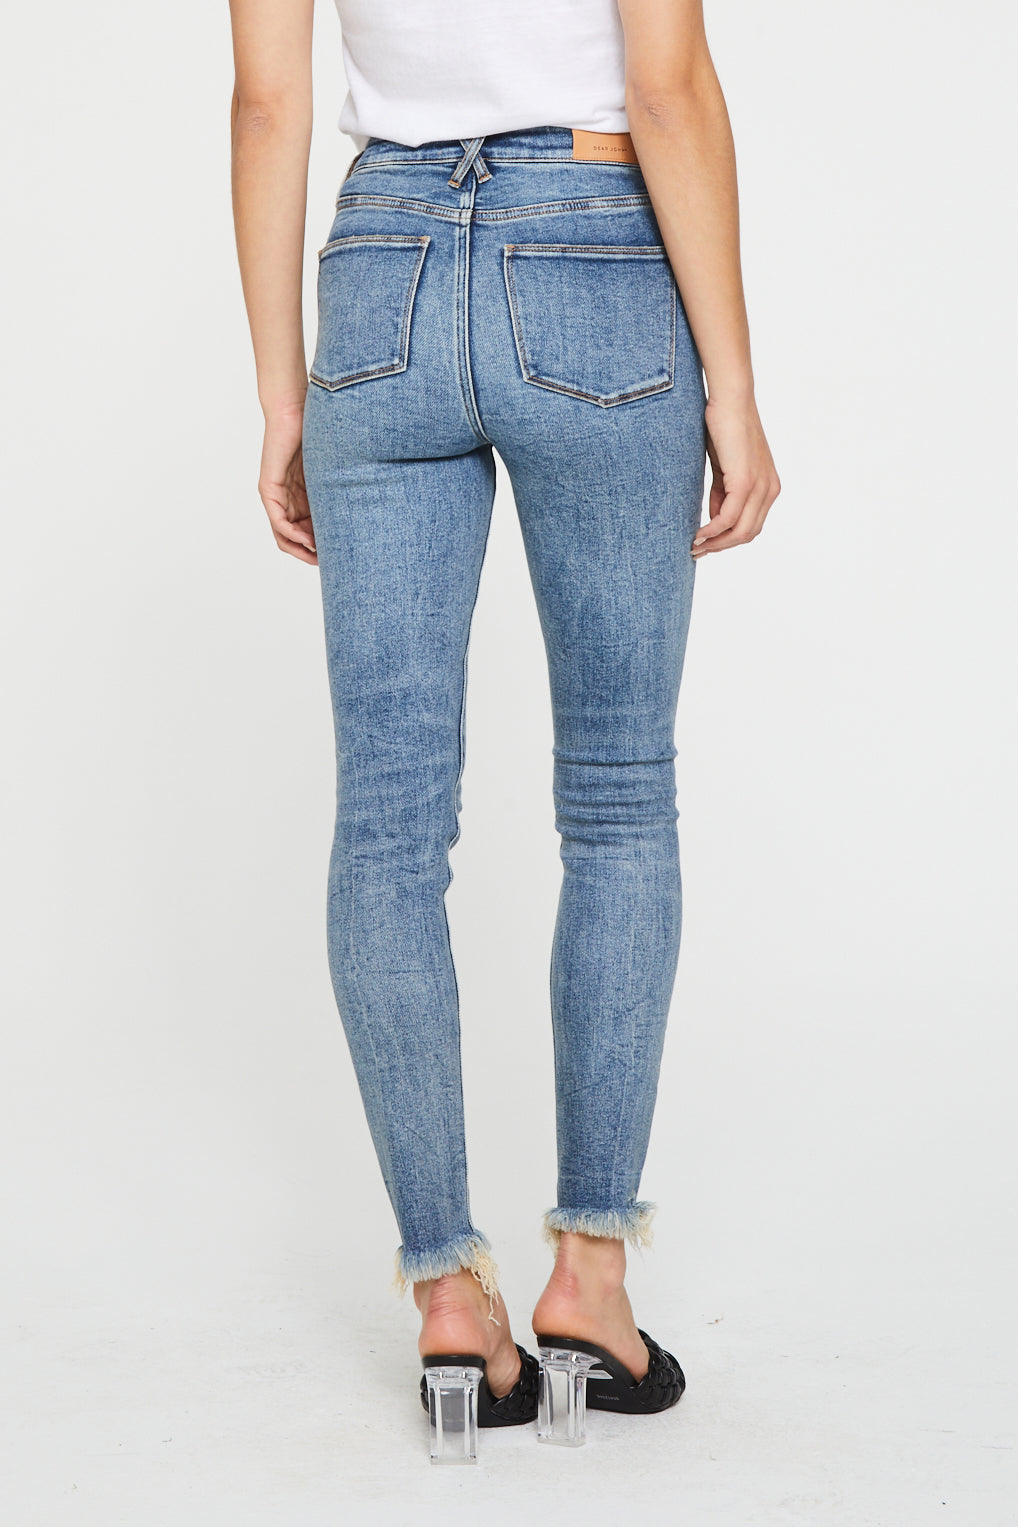 Olivia Skinny Jeans - West Canyon - Brazos Avenue Market 